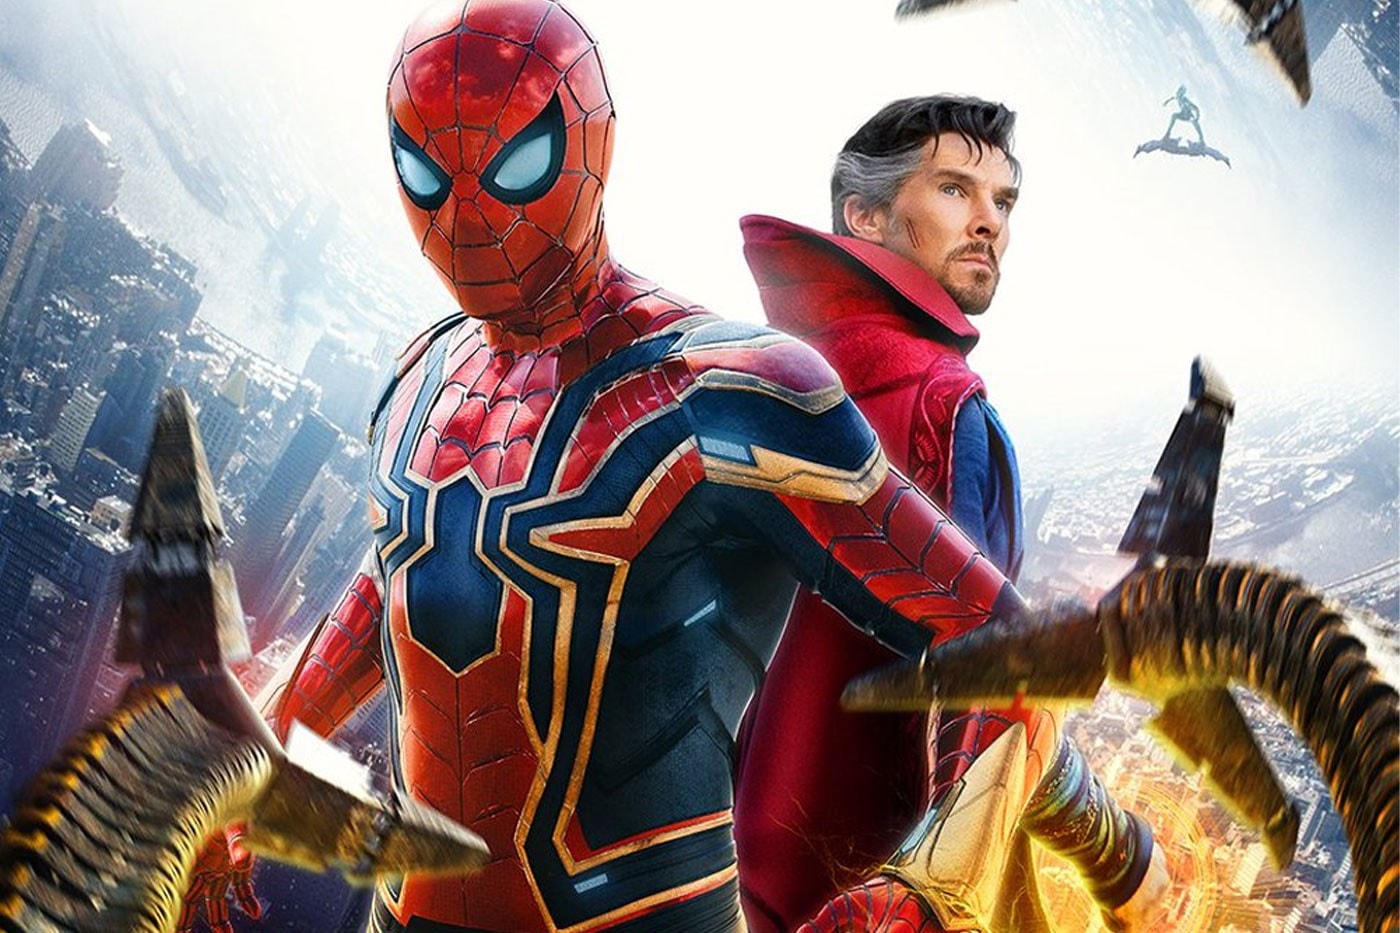 Spider-Man: No Way Home 240 million usd opening weekend box office tom holland spider-man marvel mcu multiverse films ticket sales super heroes 